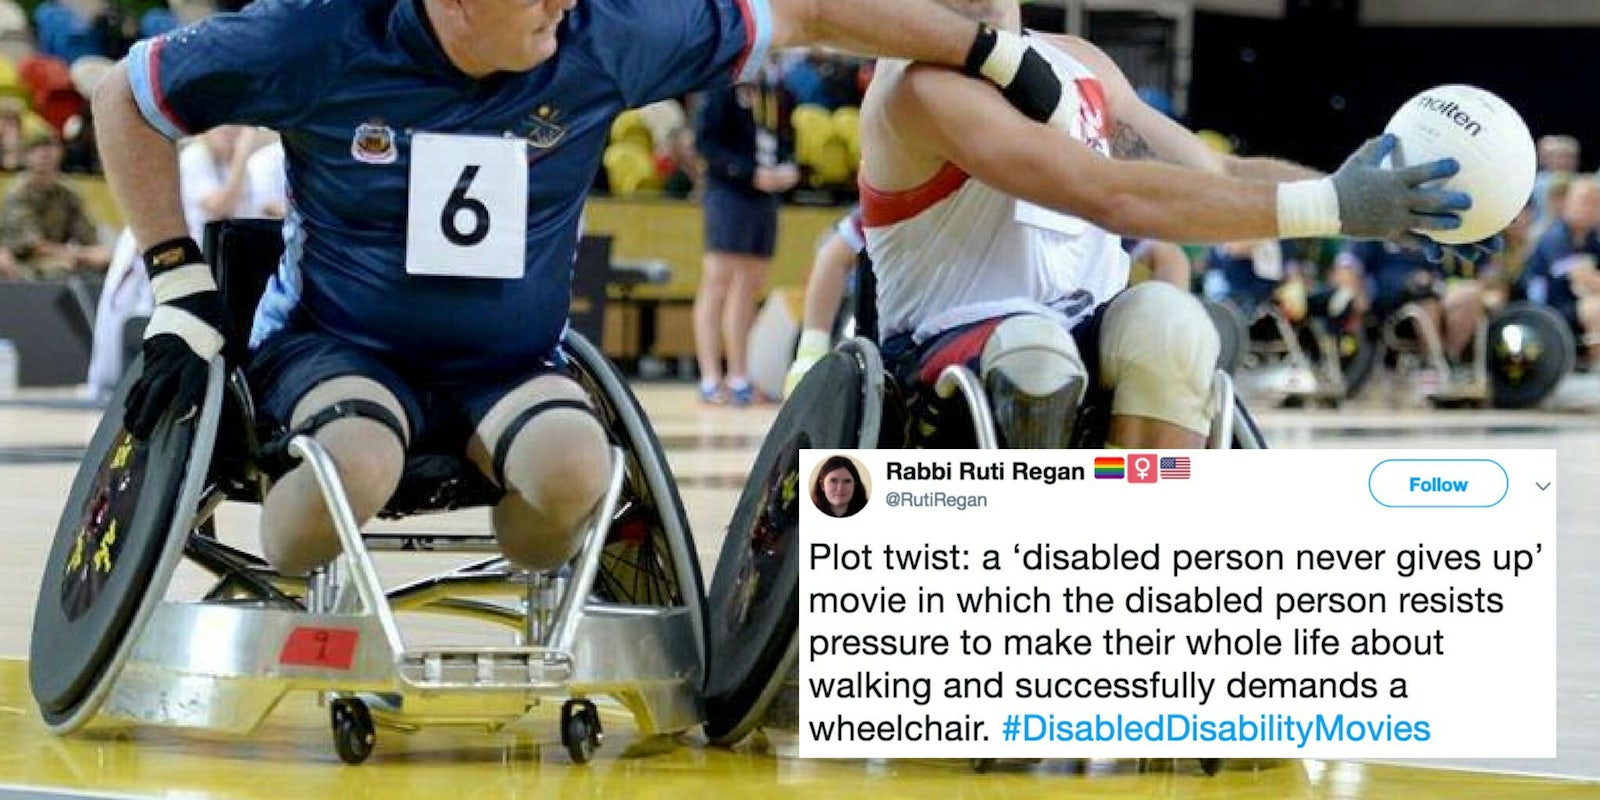 #DisabledDisabilityMovies challenges movie narratives